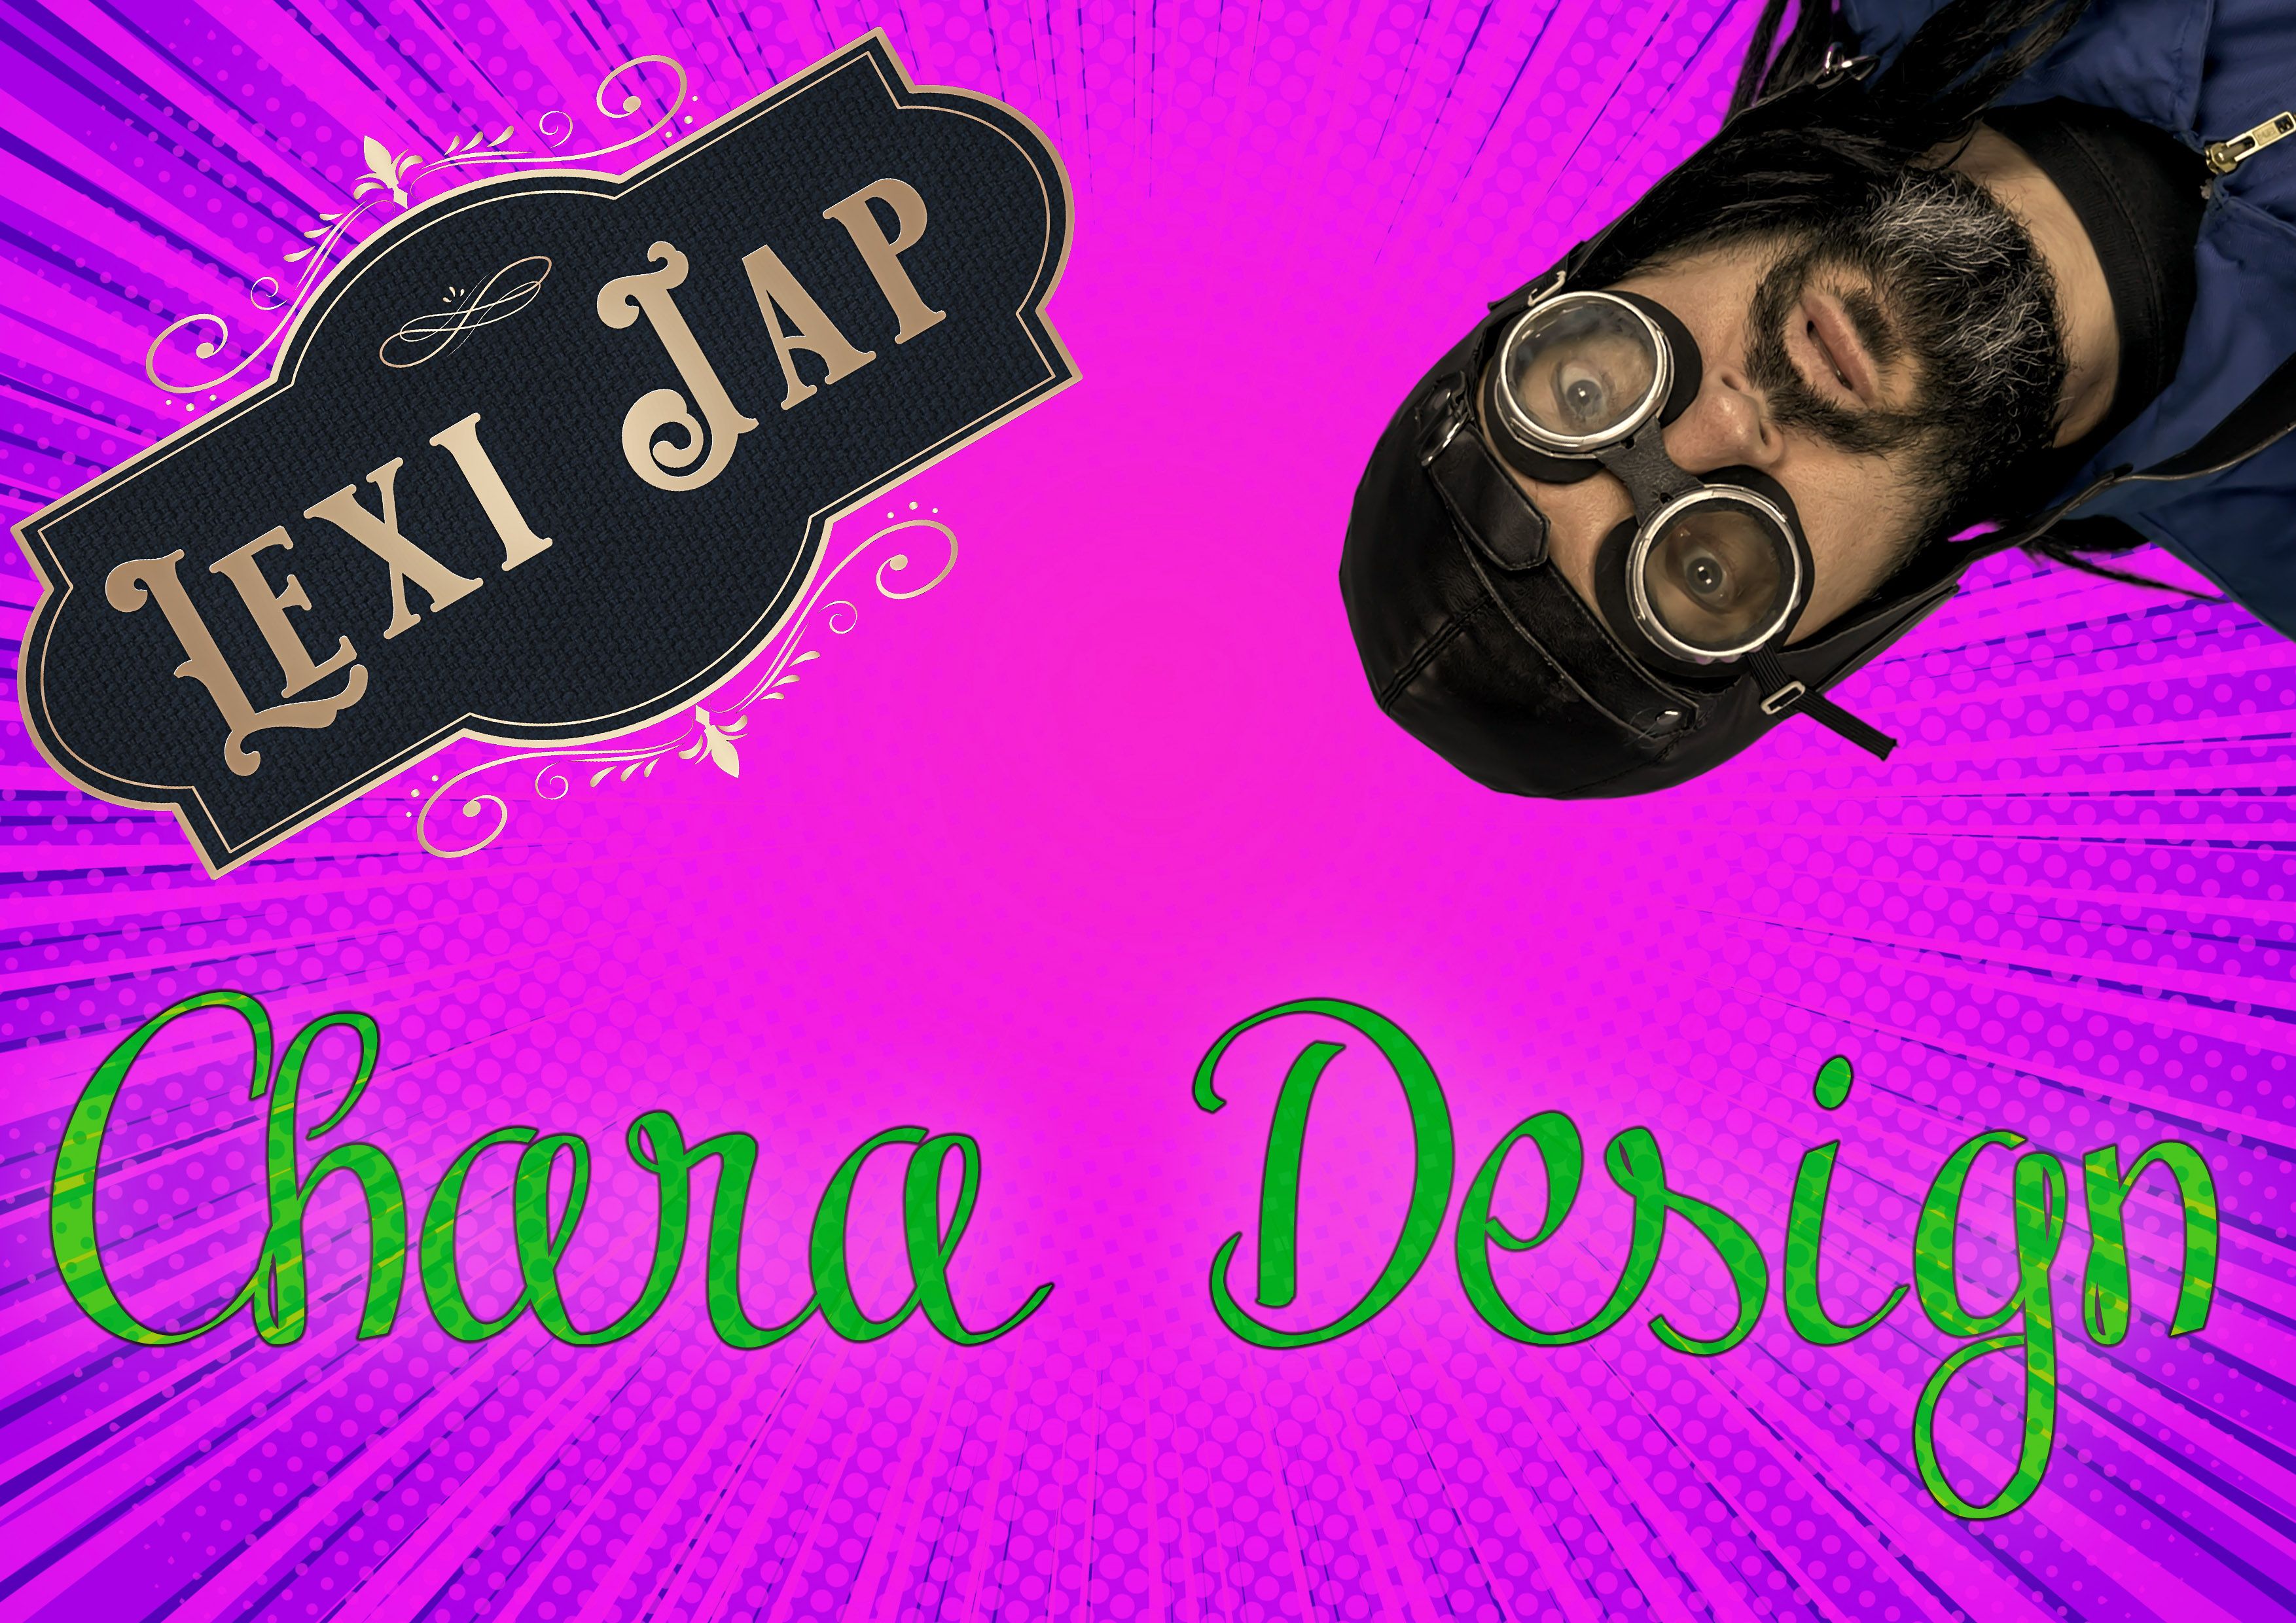 Lexijap-Chara-Design.jpg